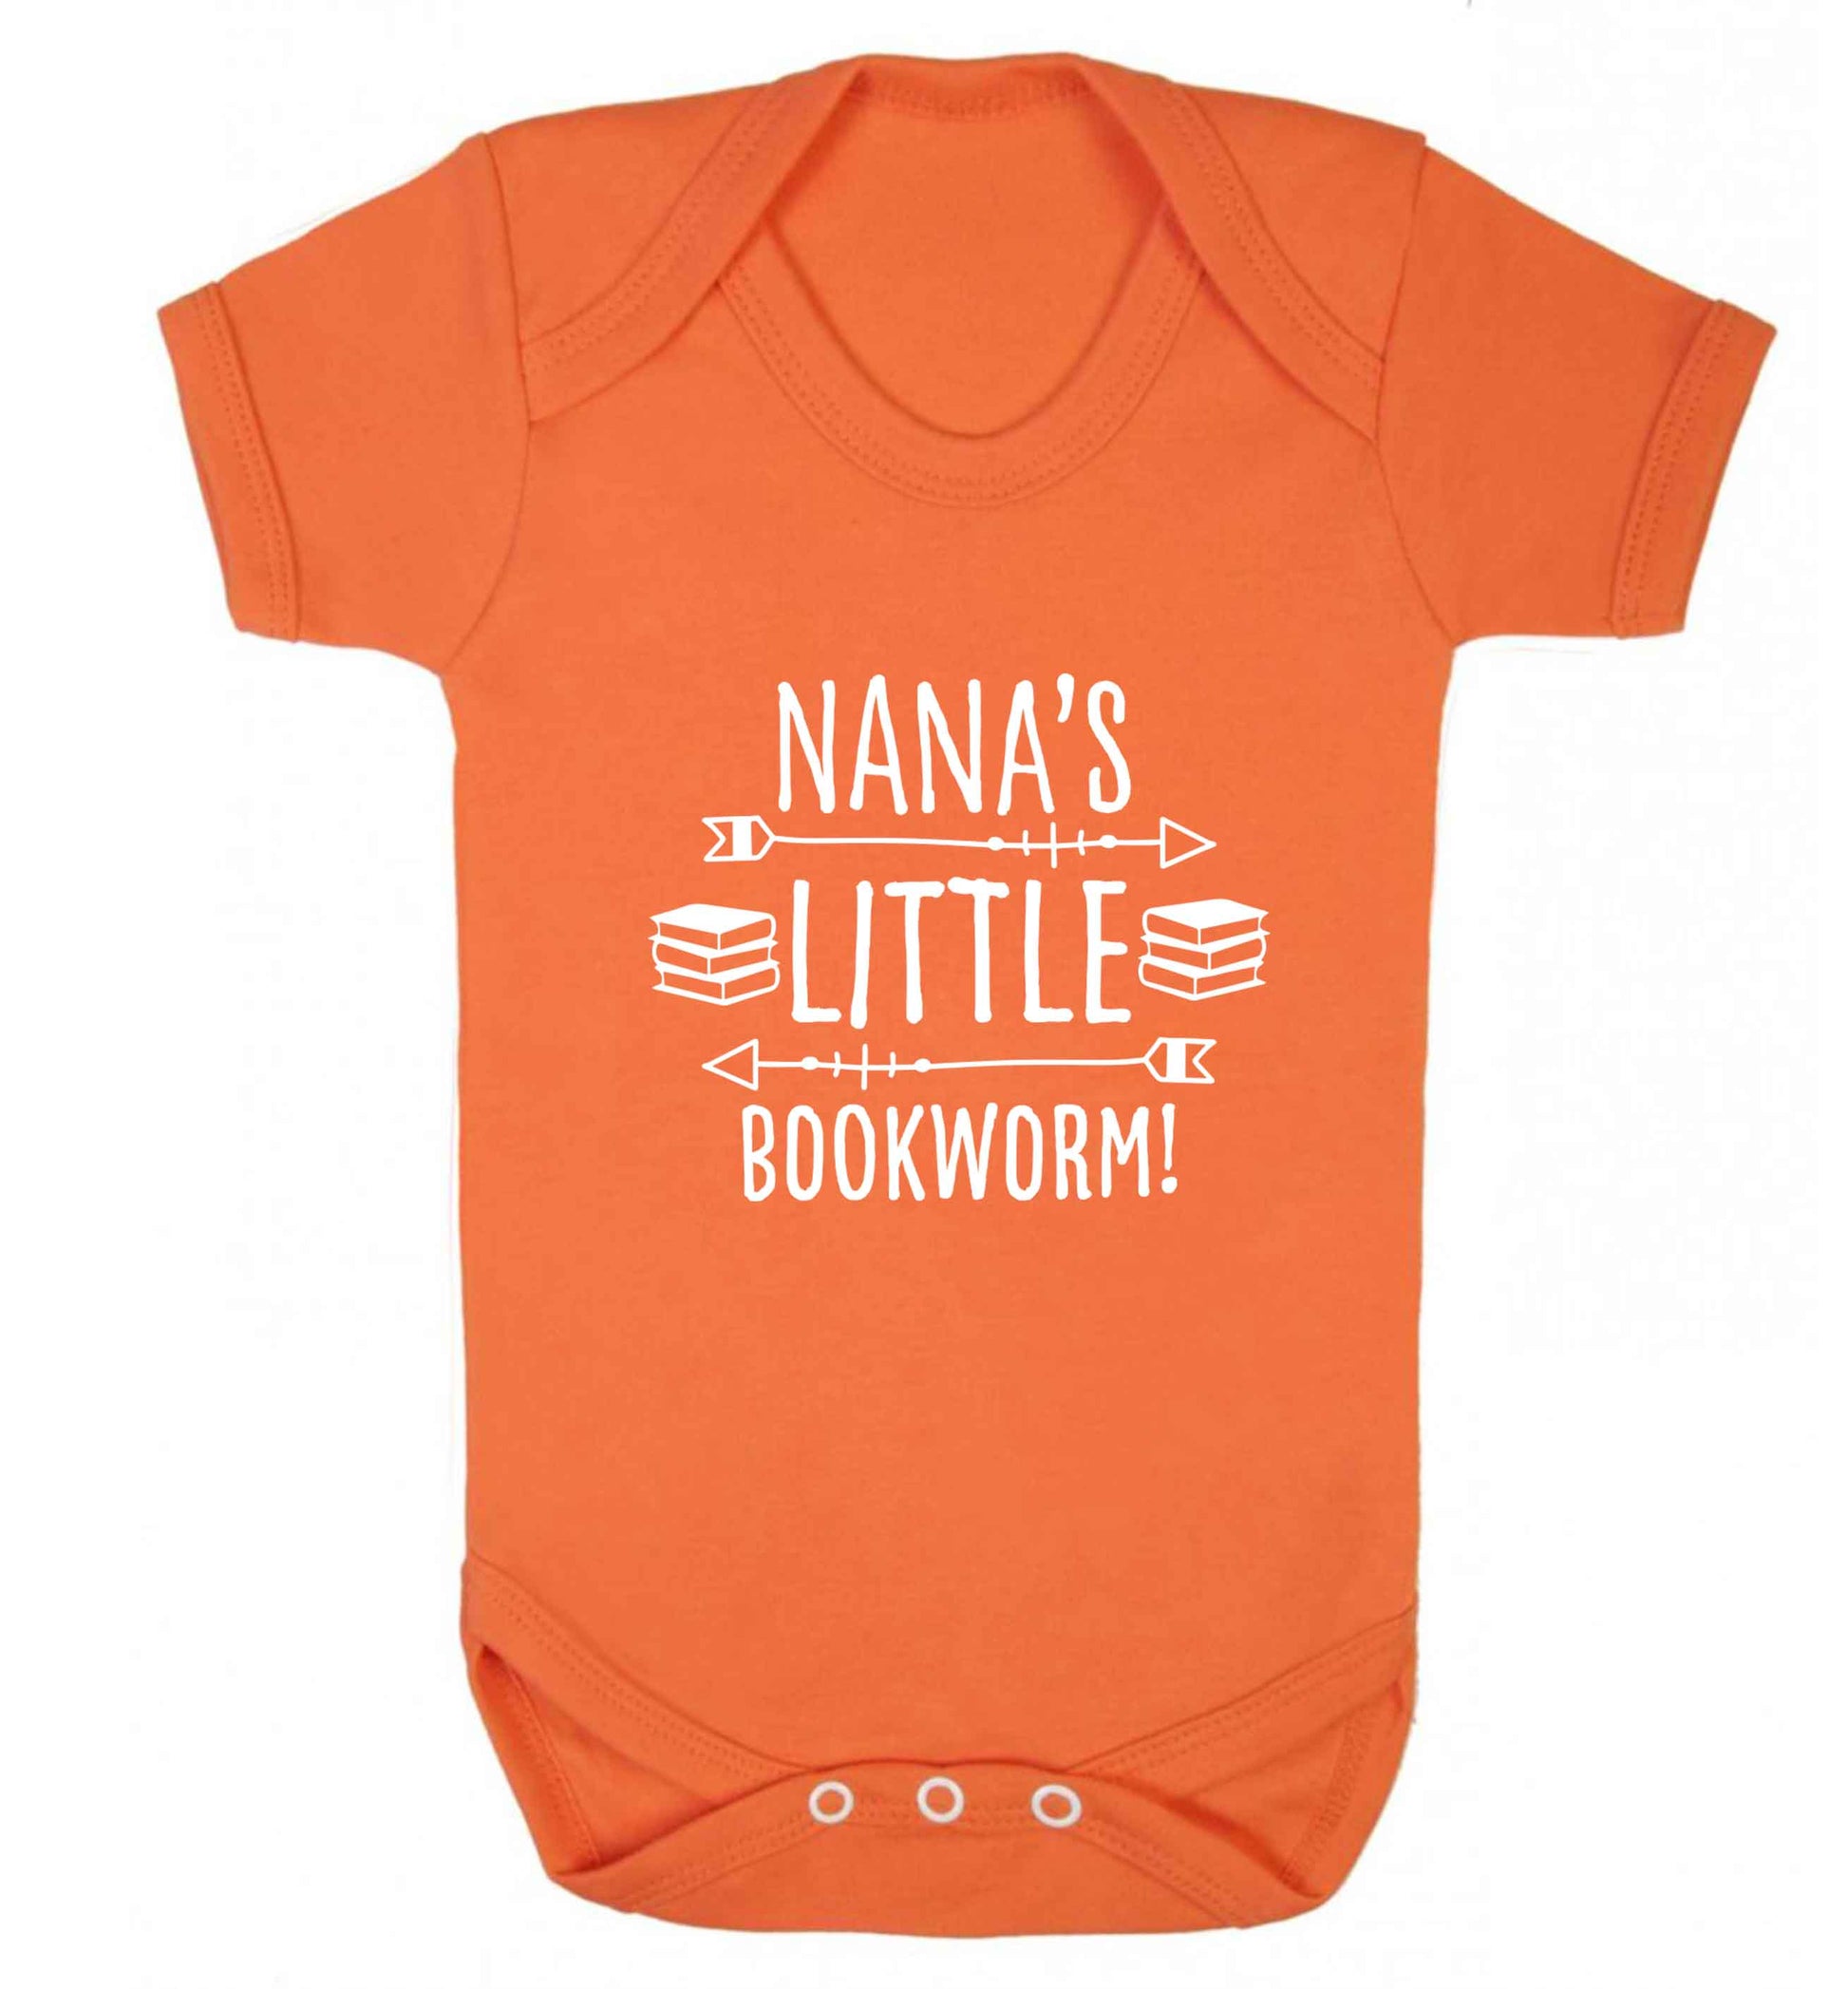 Nana's little bookworm baby vest orange 18-24 months